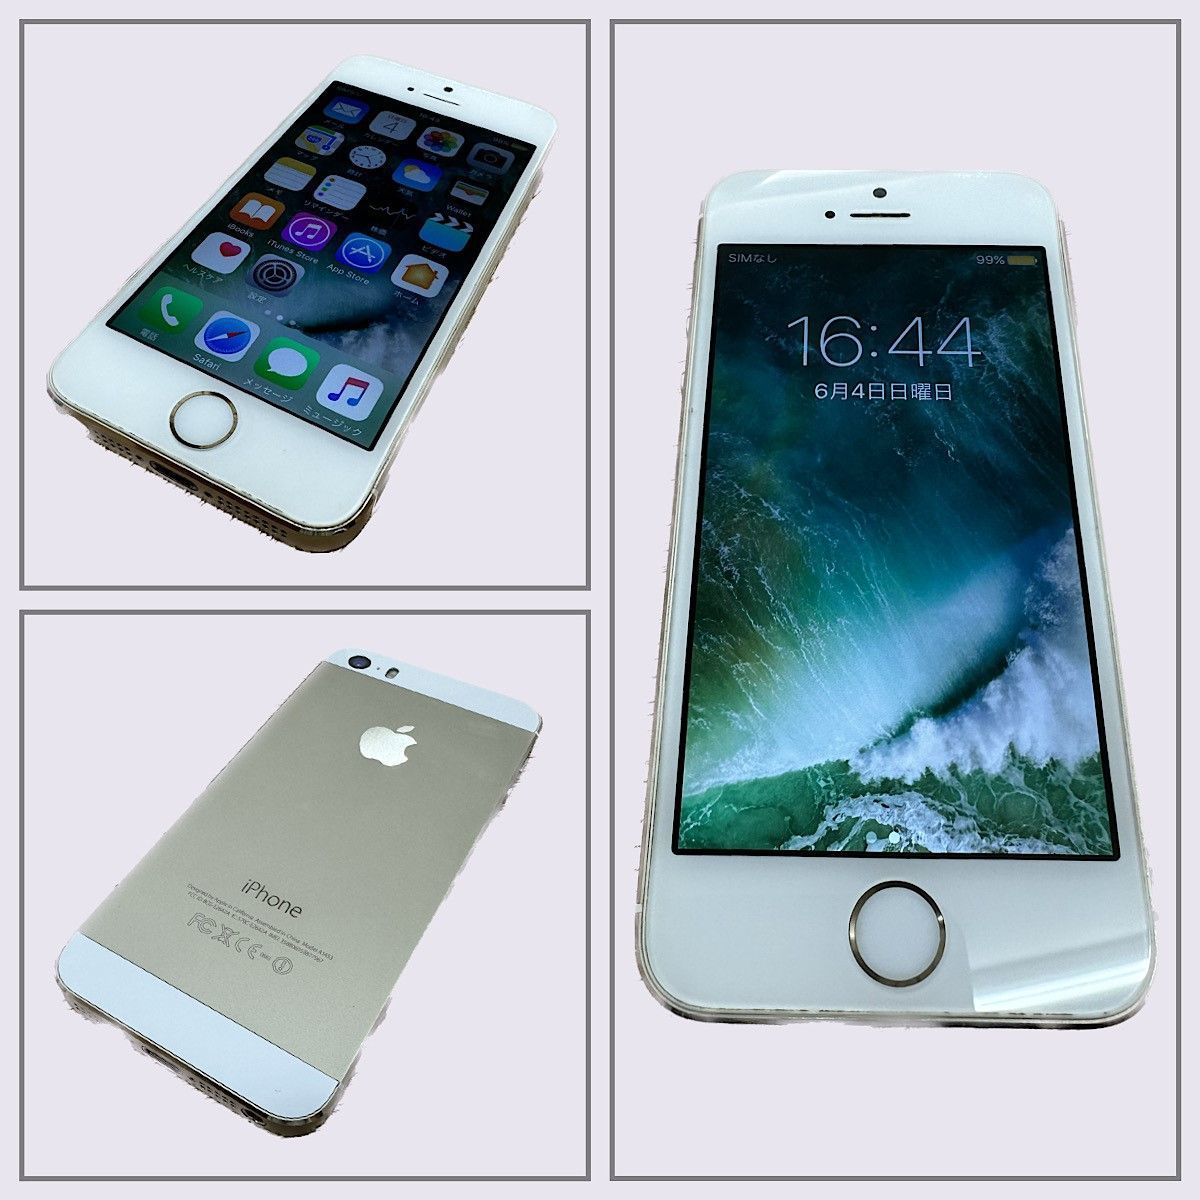 iPhone 5s Silver 16 GB Softbank